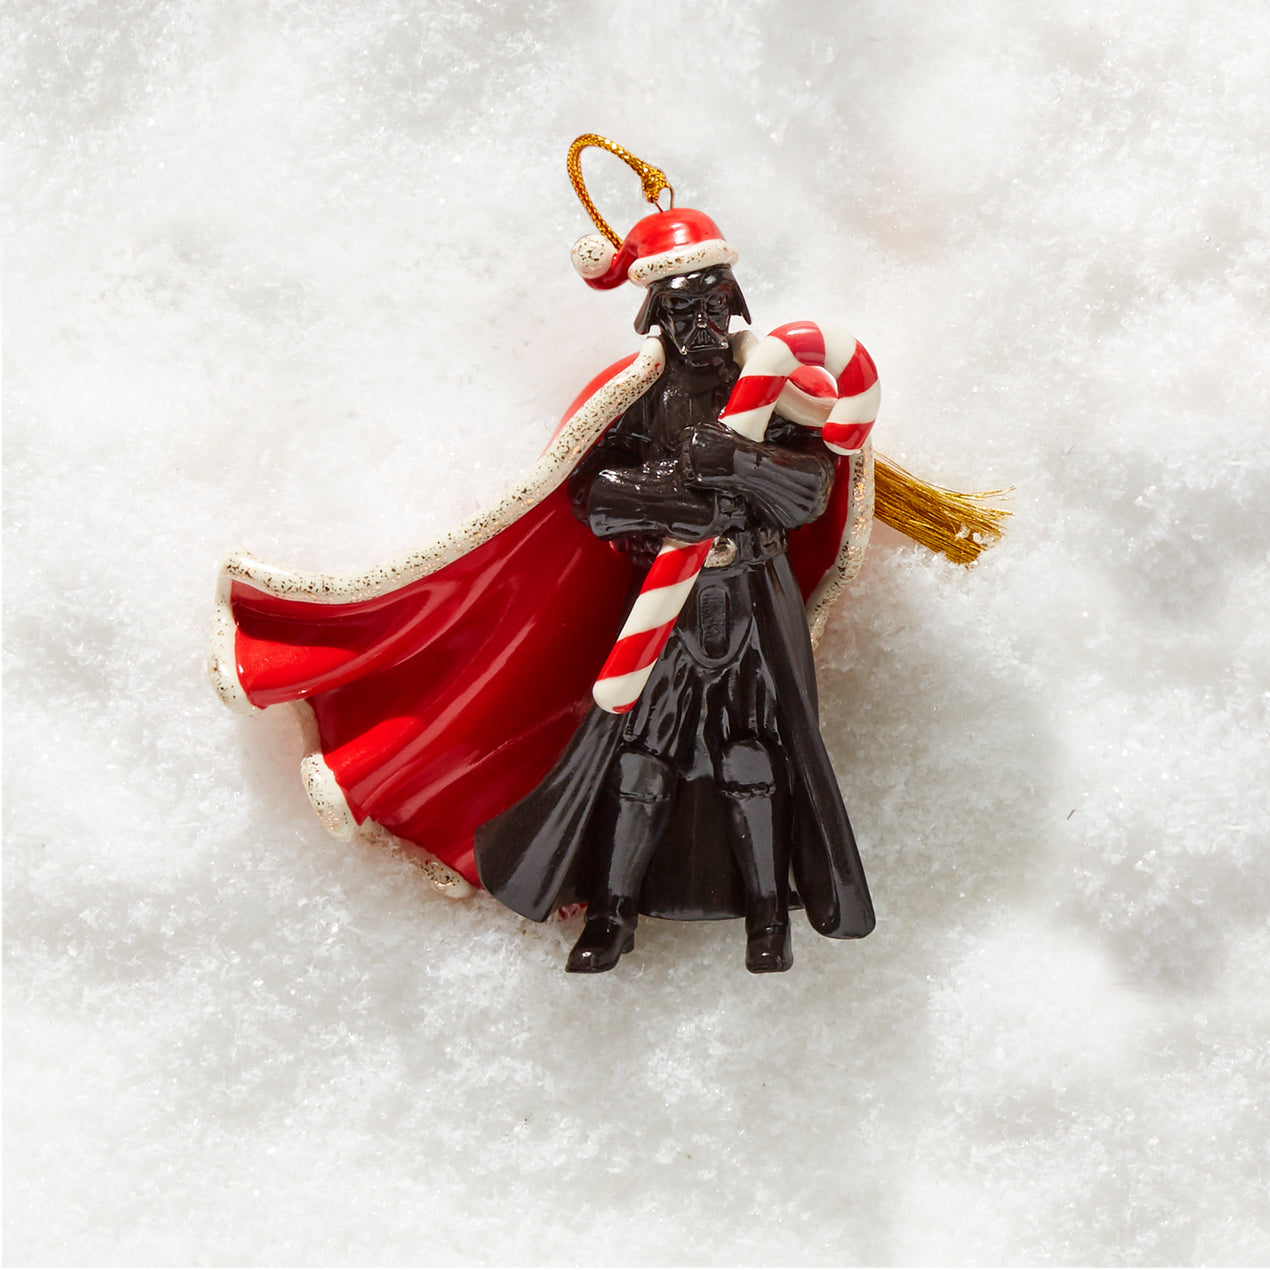 Star Wars Ornaments- Darth Vader